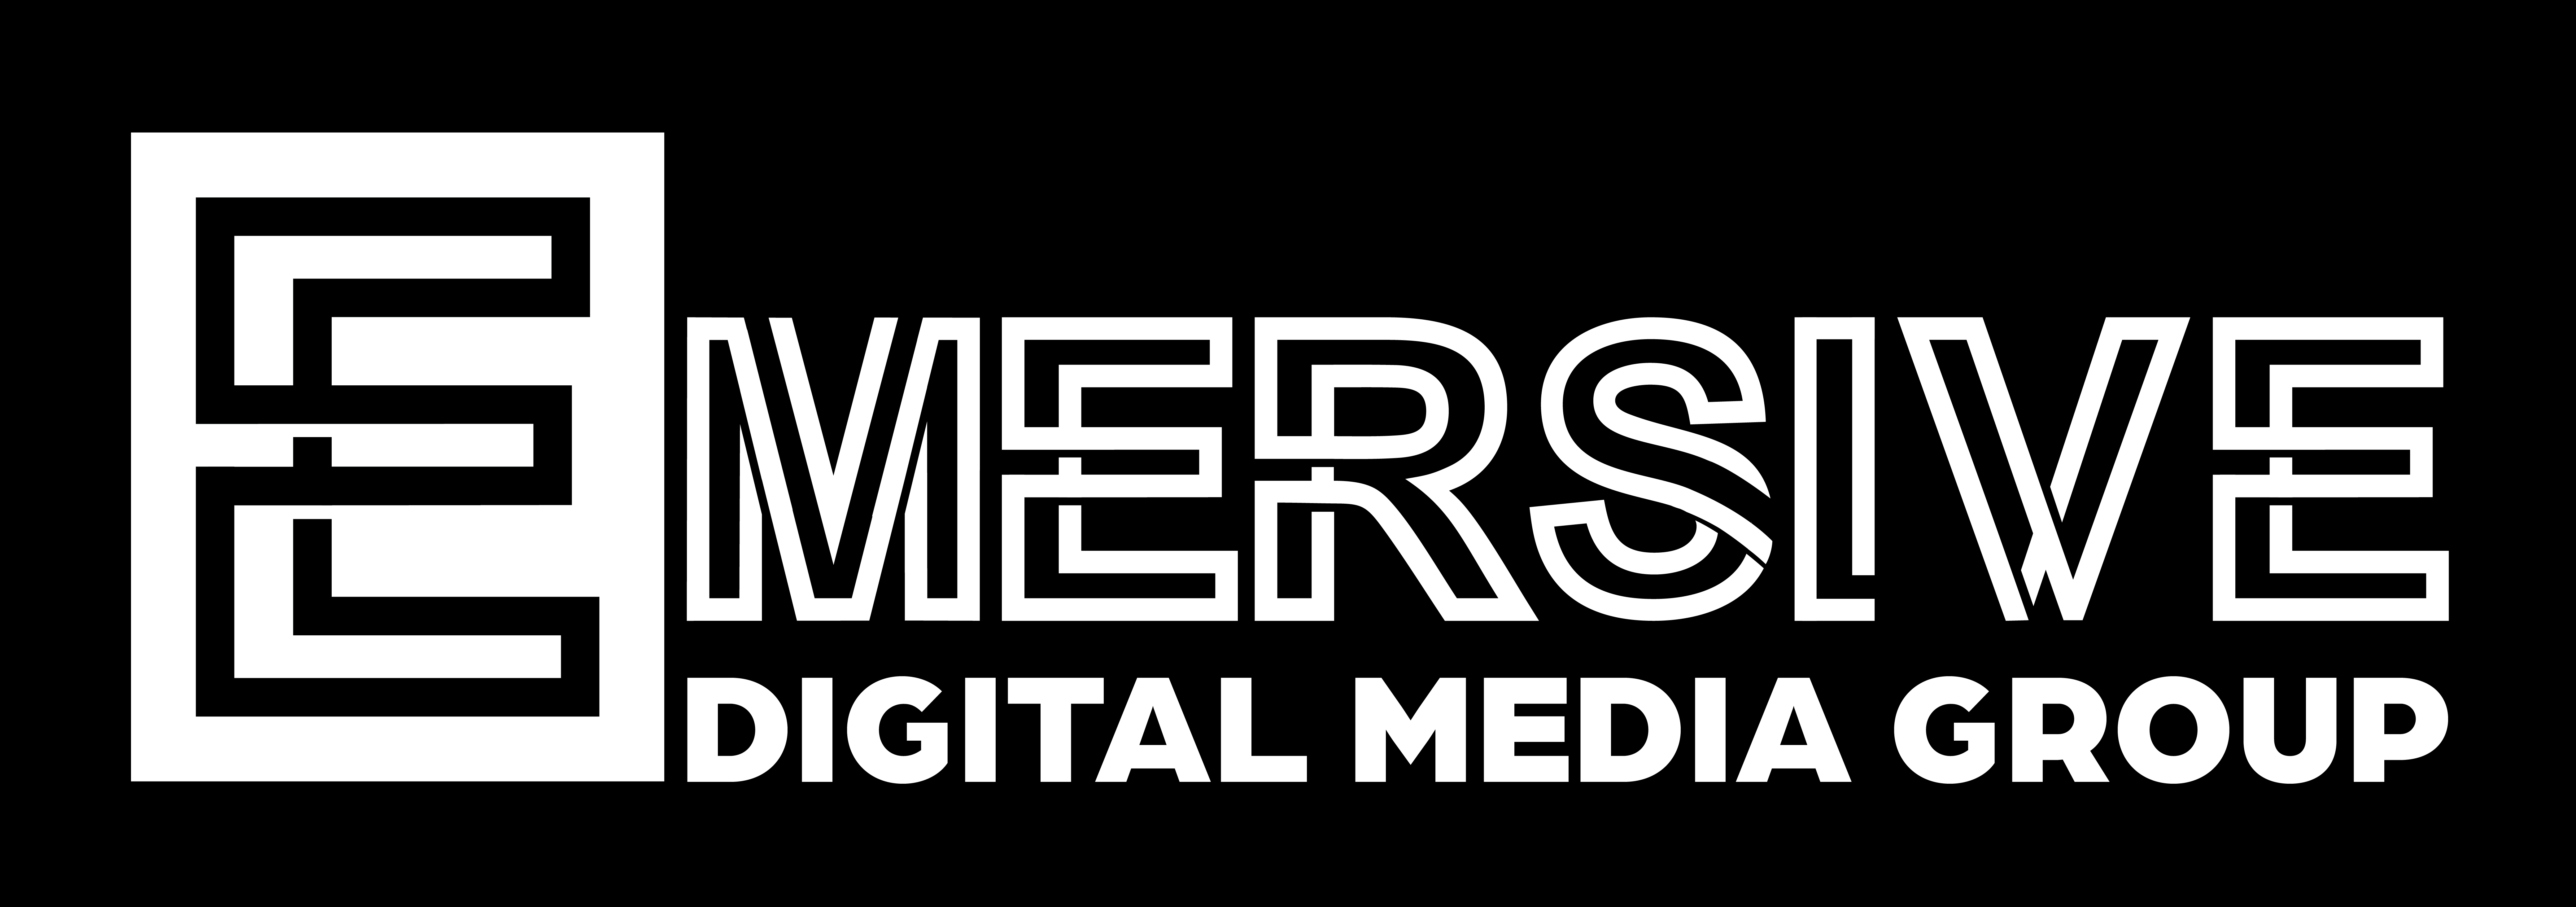 Emersive Digital Video Group logo